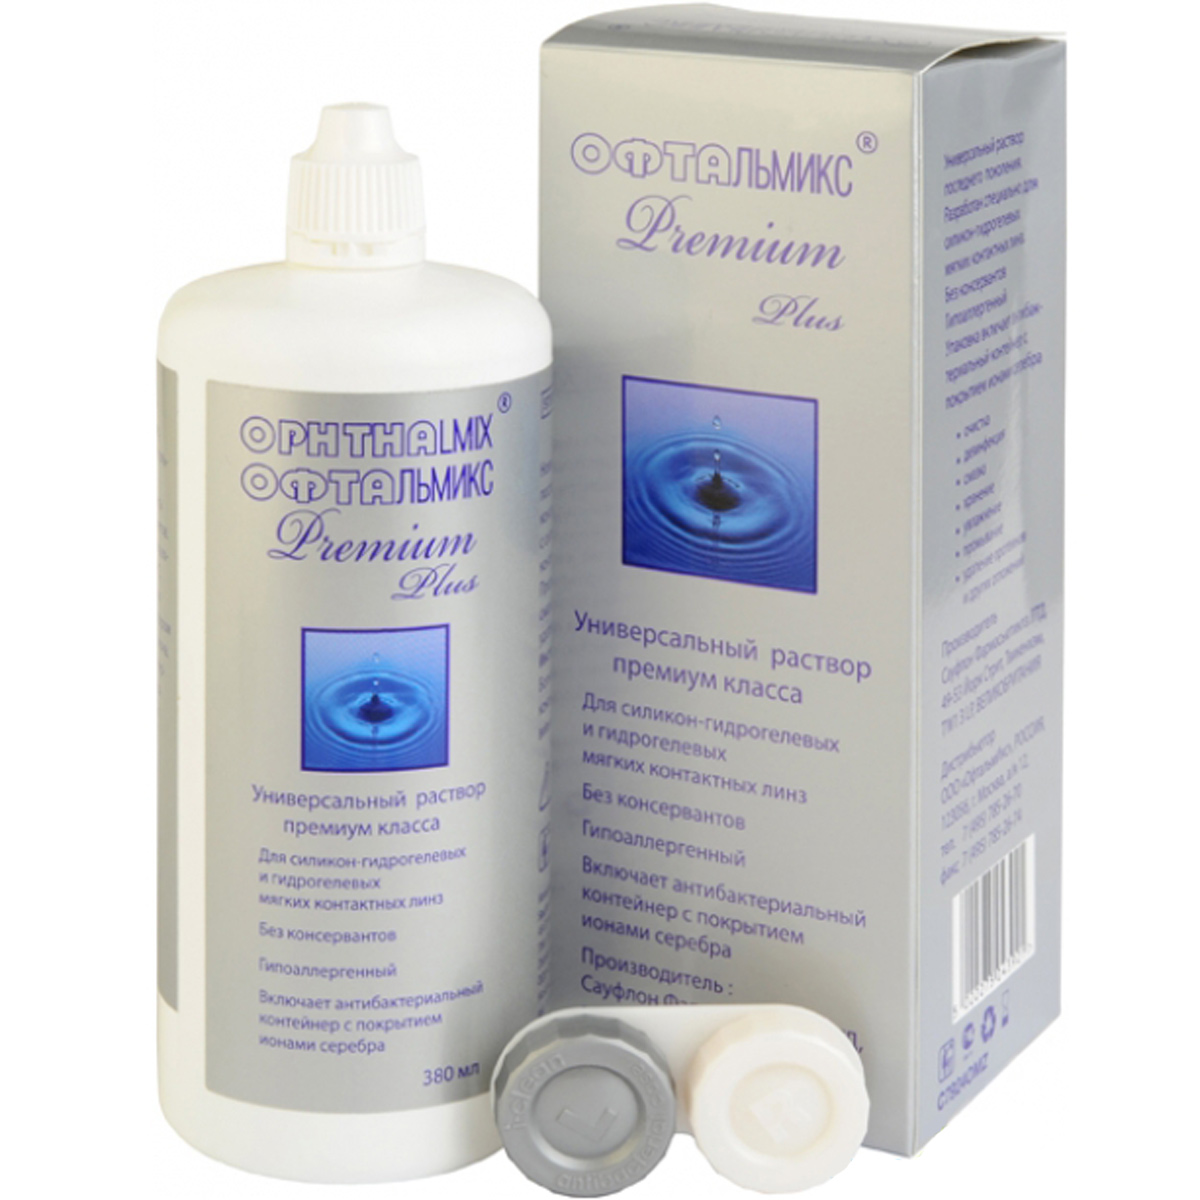 Офтальмикс Premium Plus 380 ml